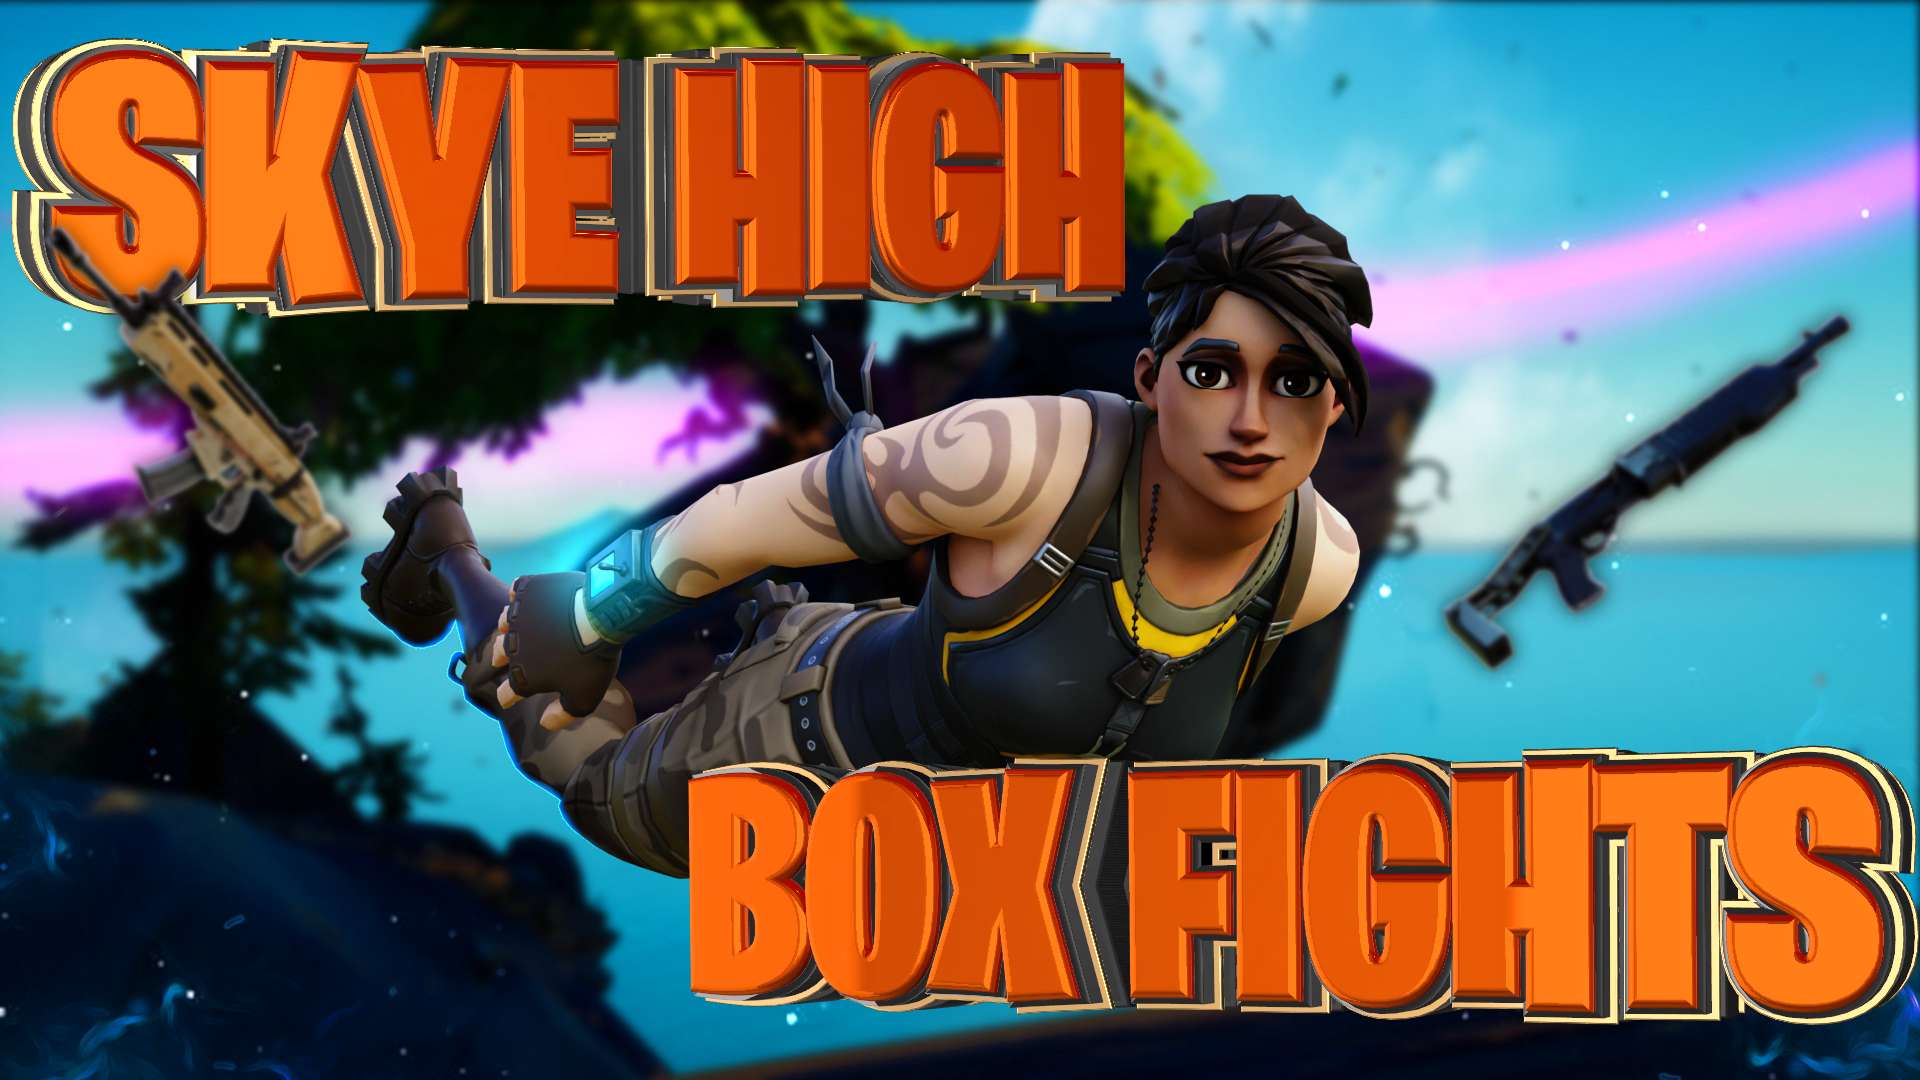 🌇SKYE HIGH BOX FIGHTS image 3